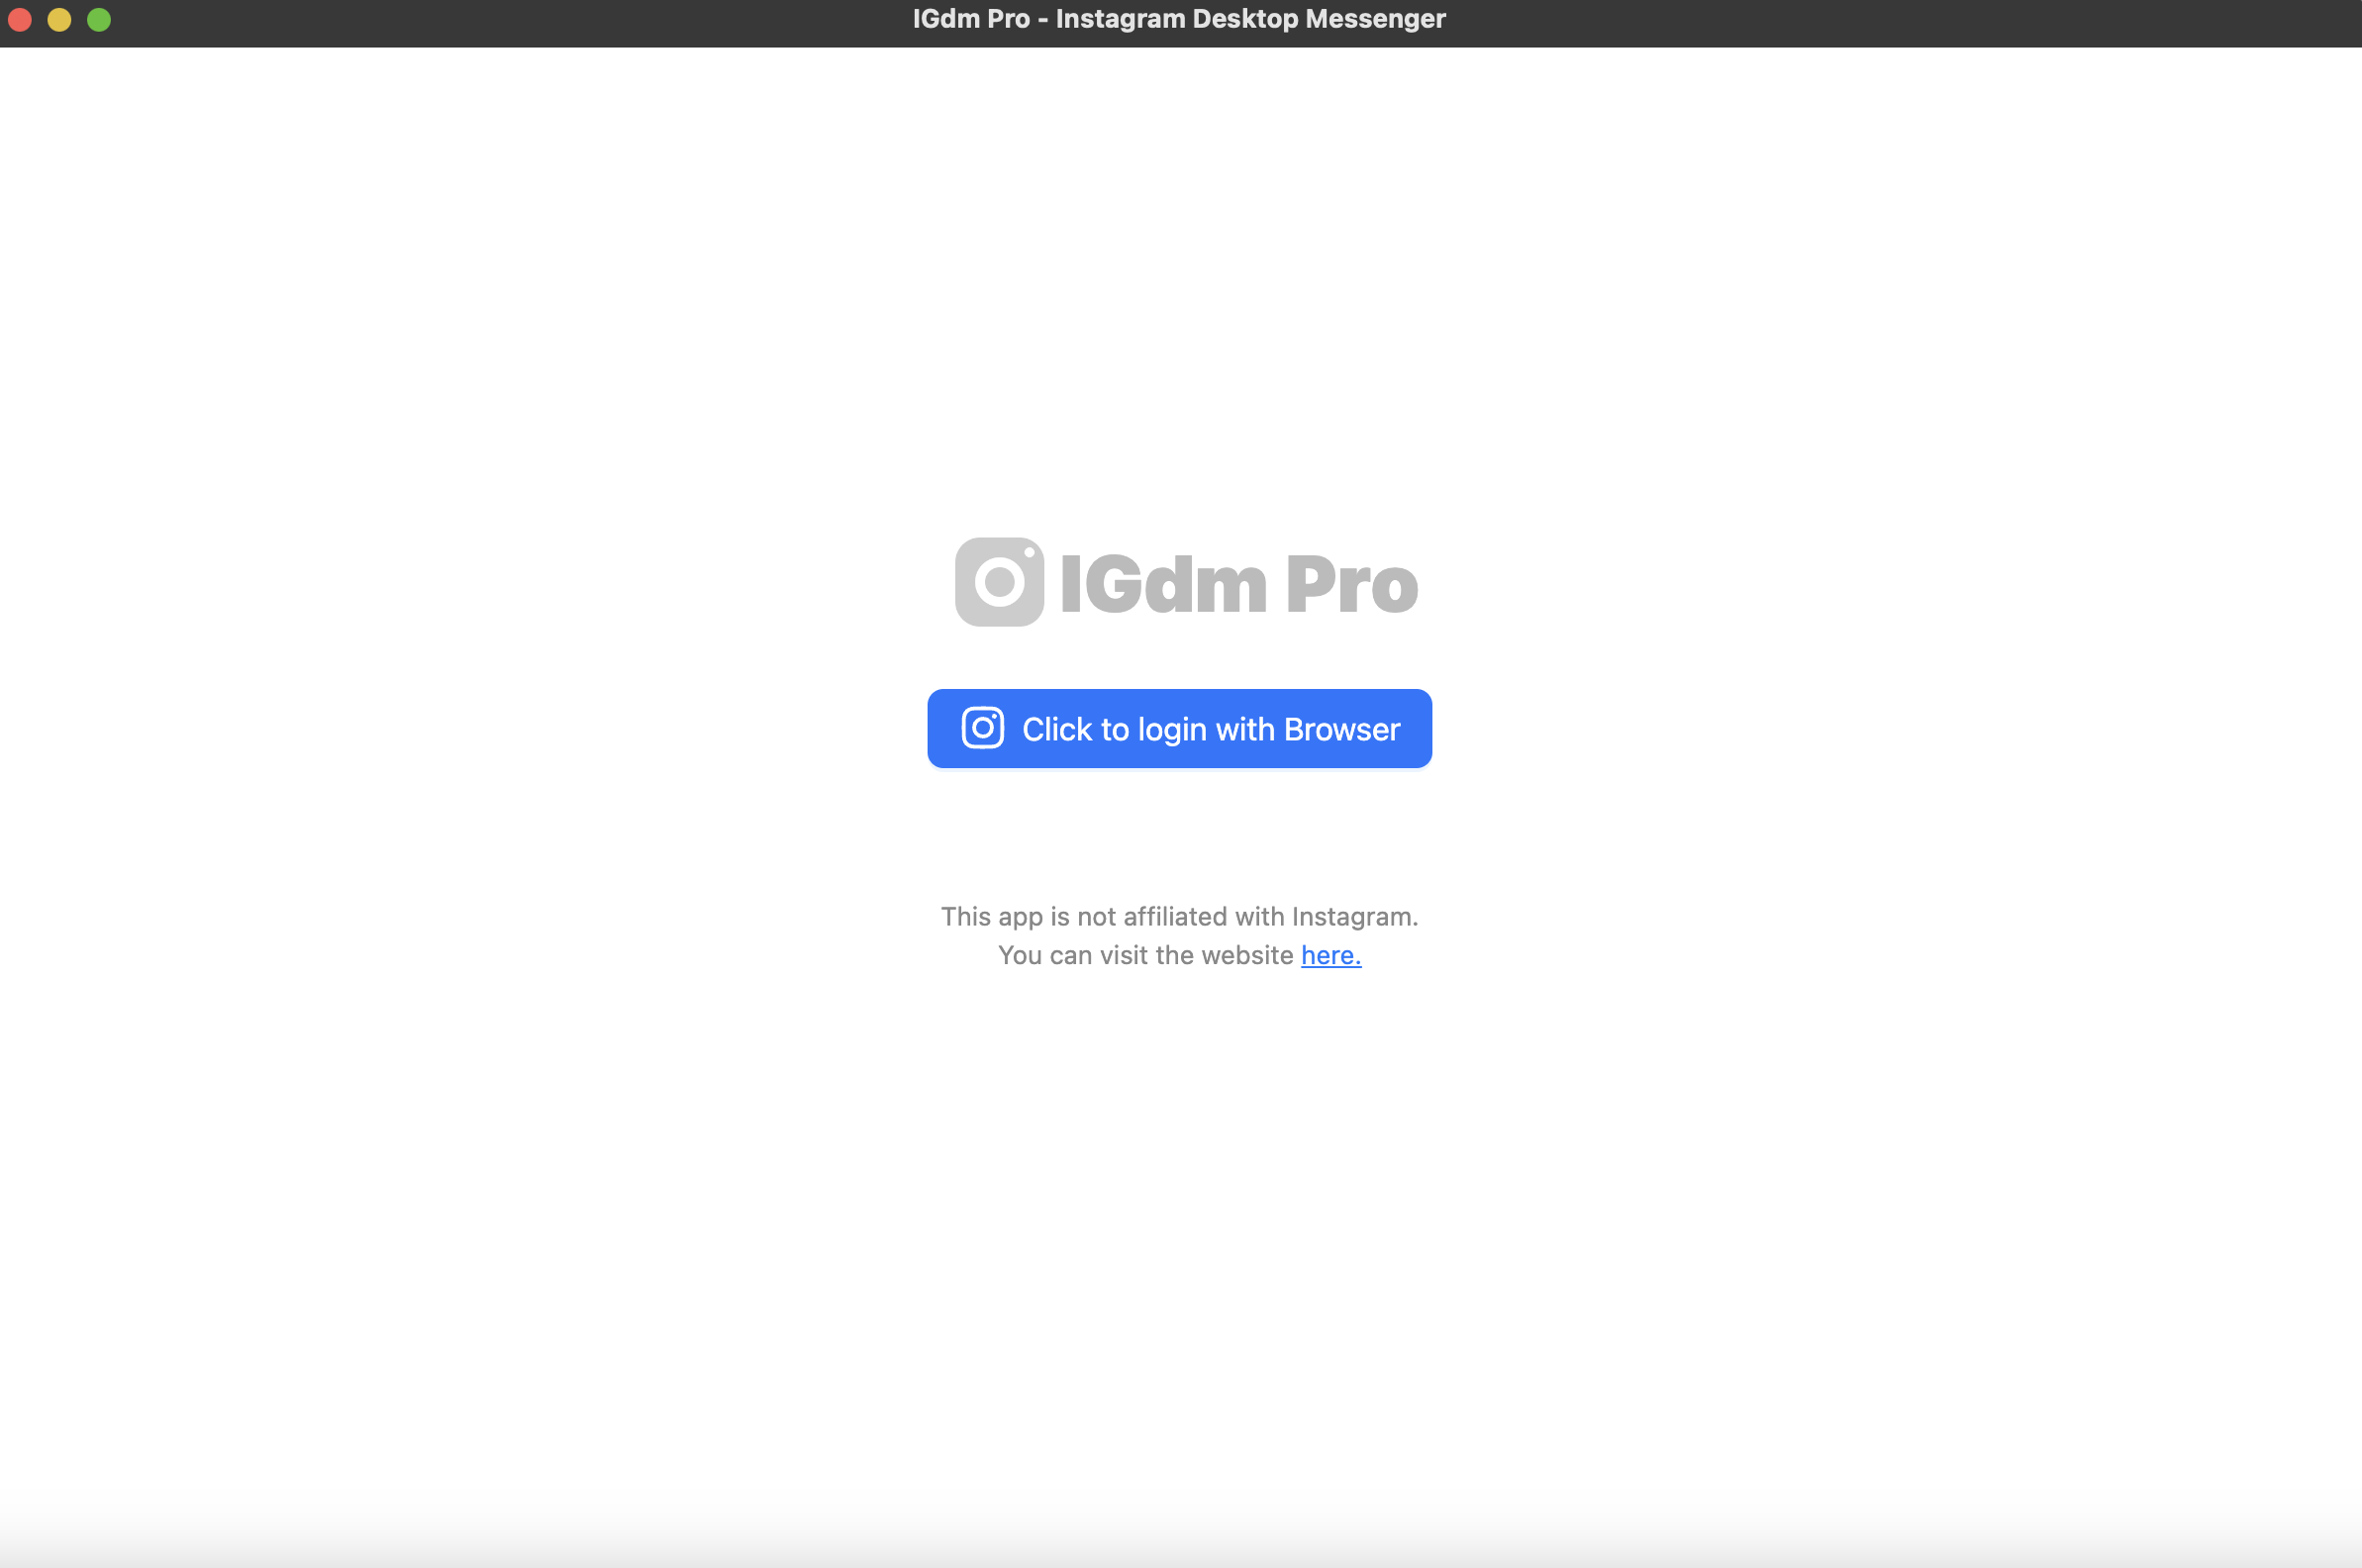 IGdm Pro Login Screenshot